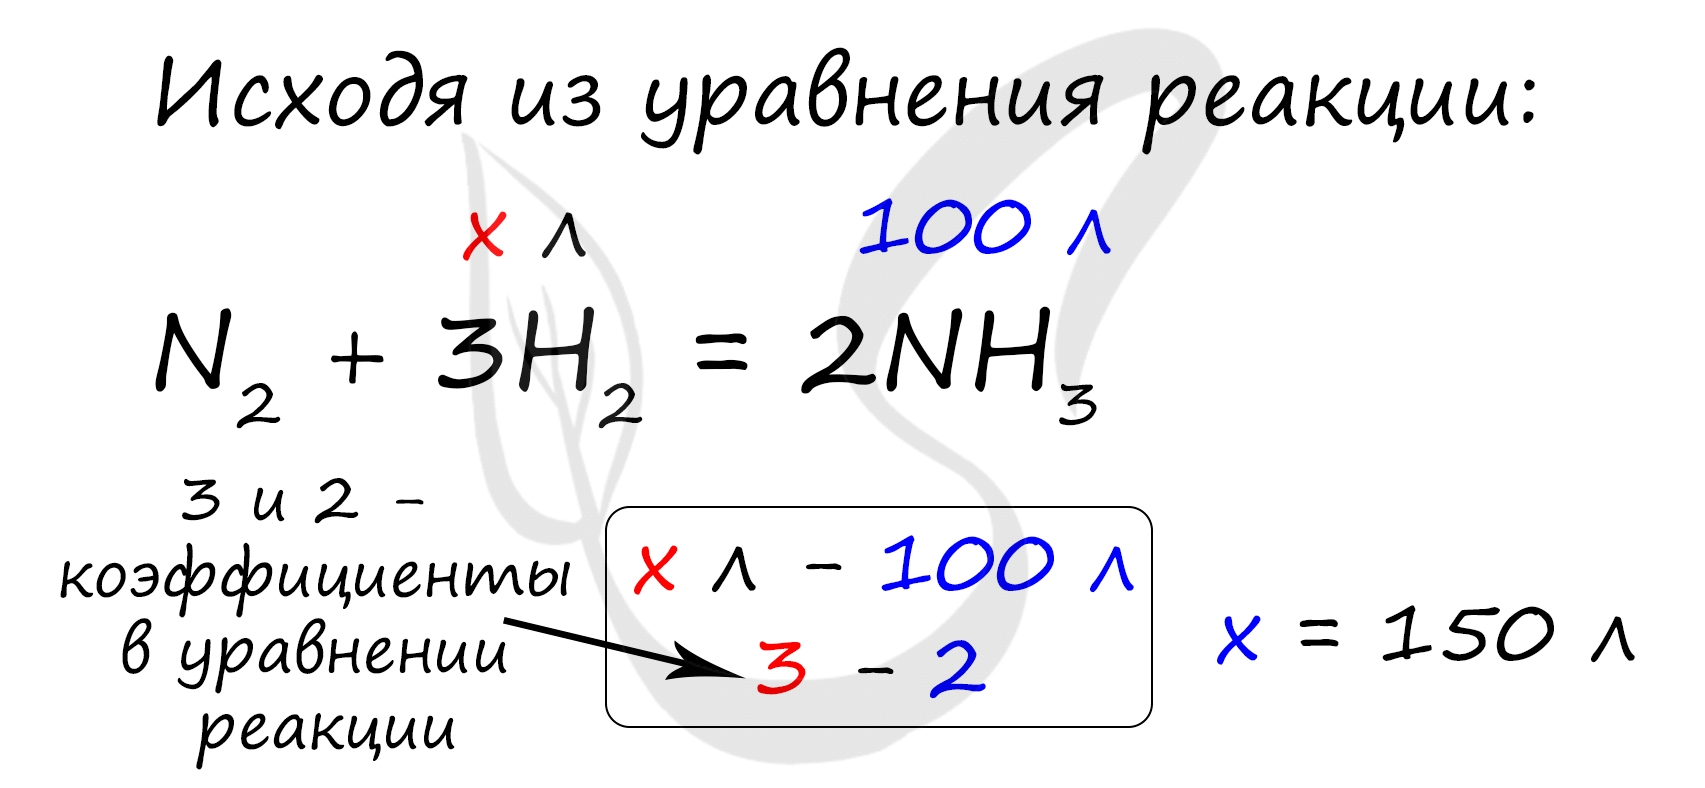 Расчет объёма (н.у.) водорода, теоретически необходимого для синтеза 100 л (н.у.) аммиака